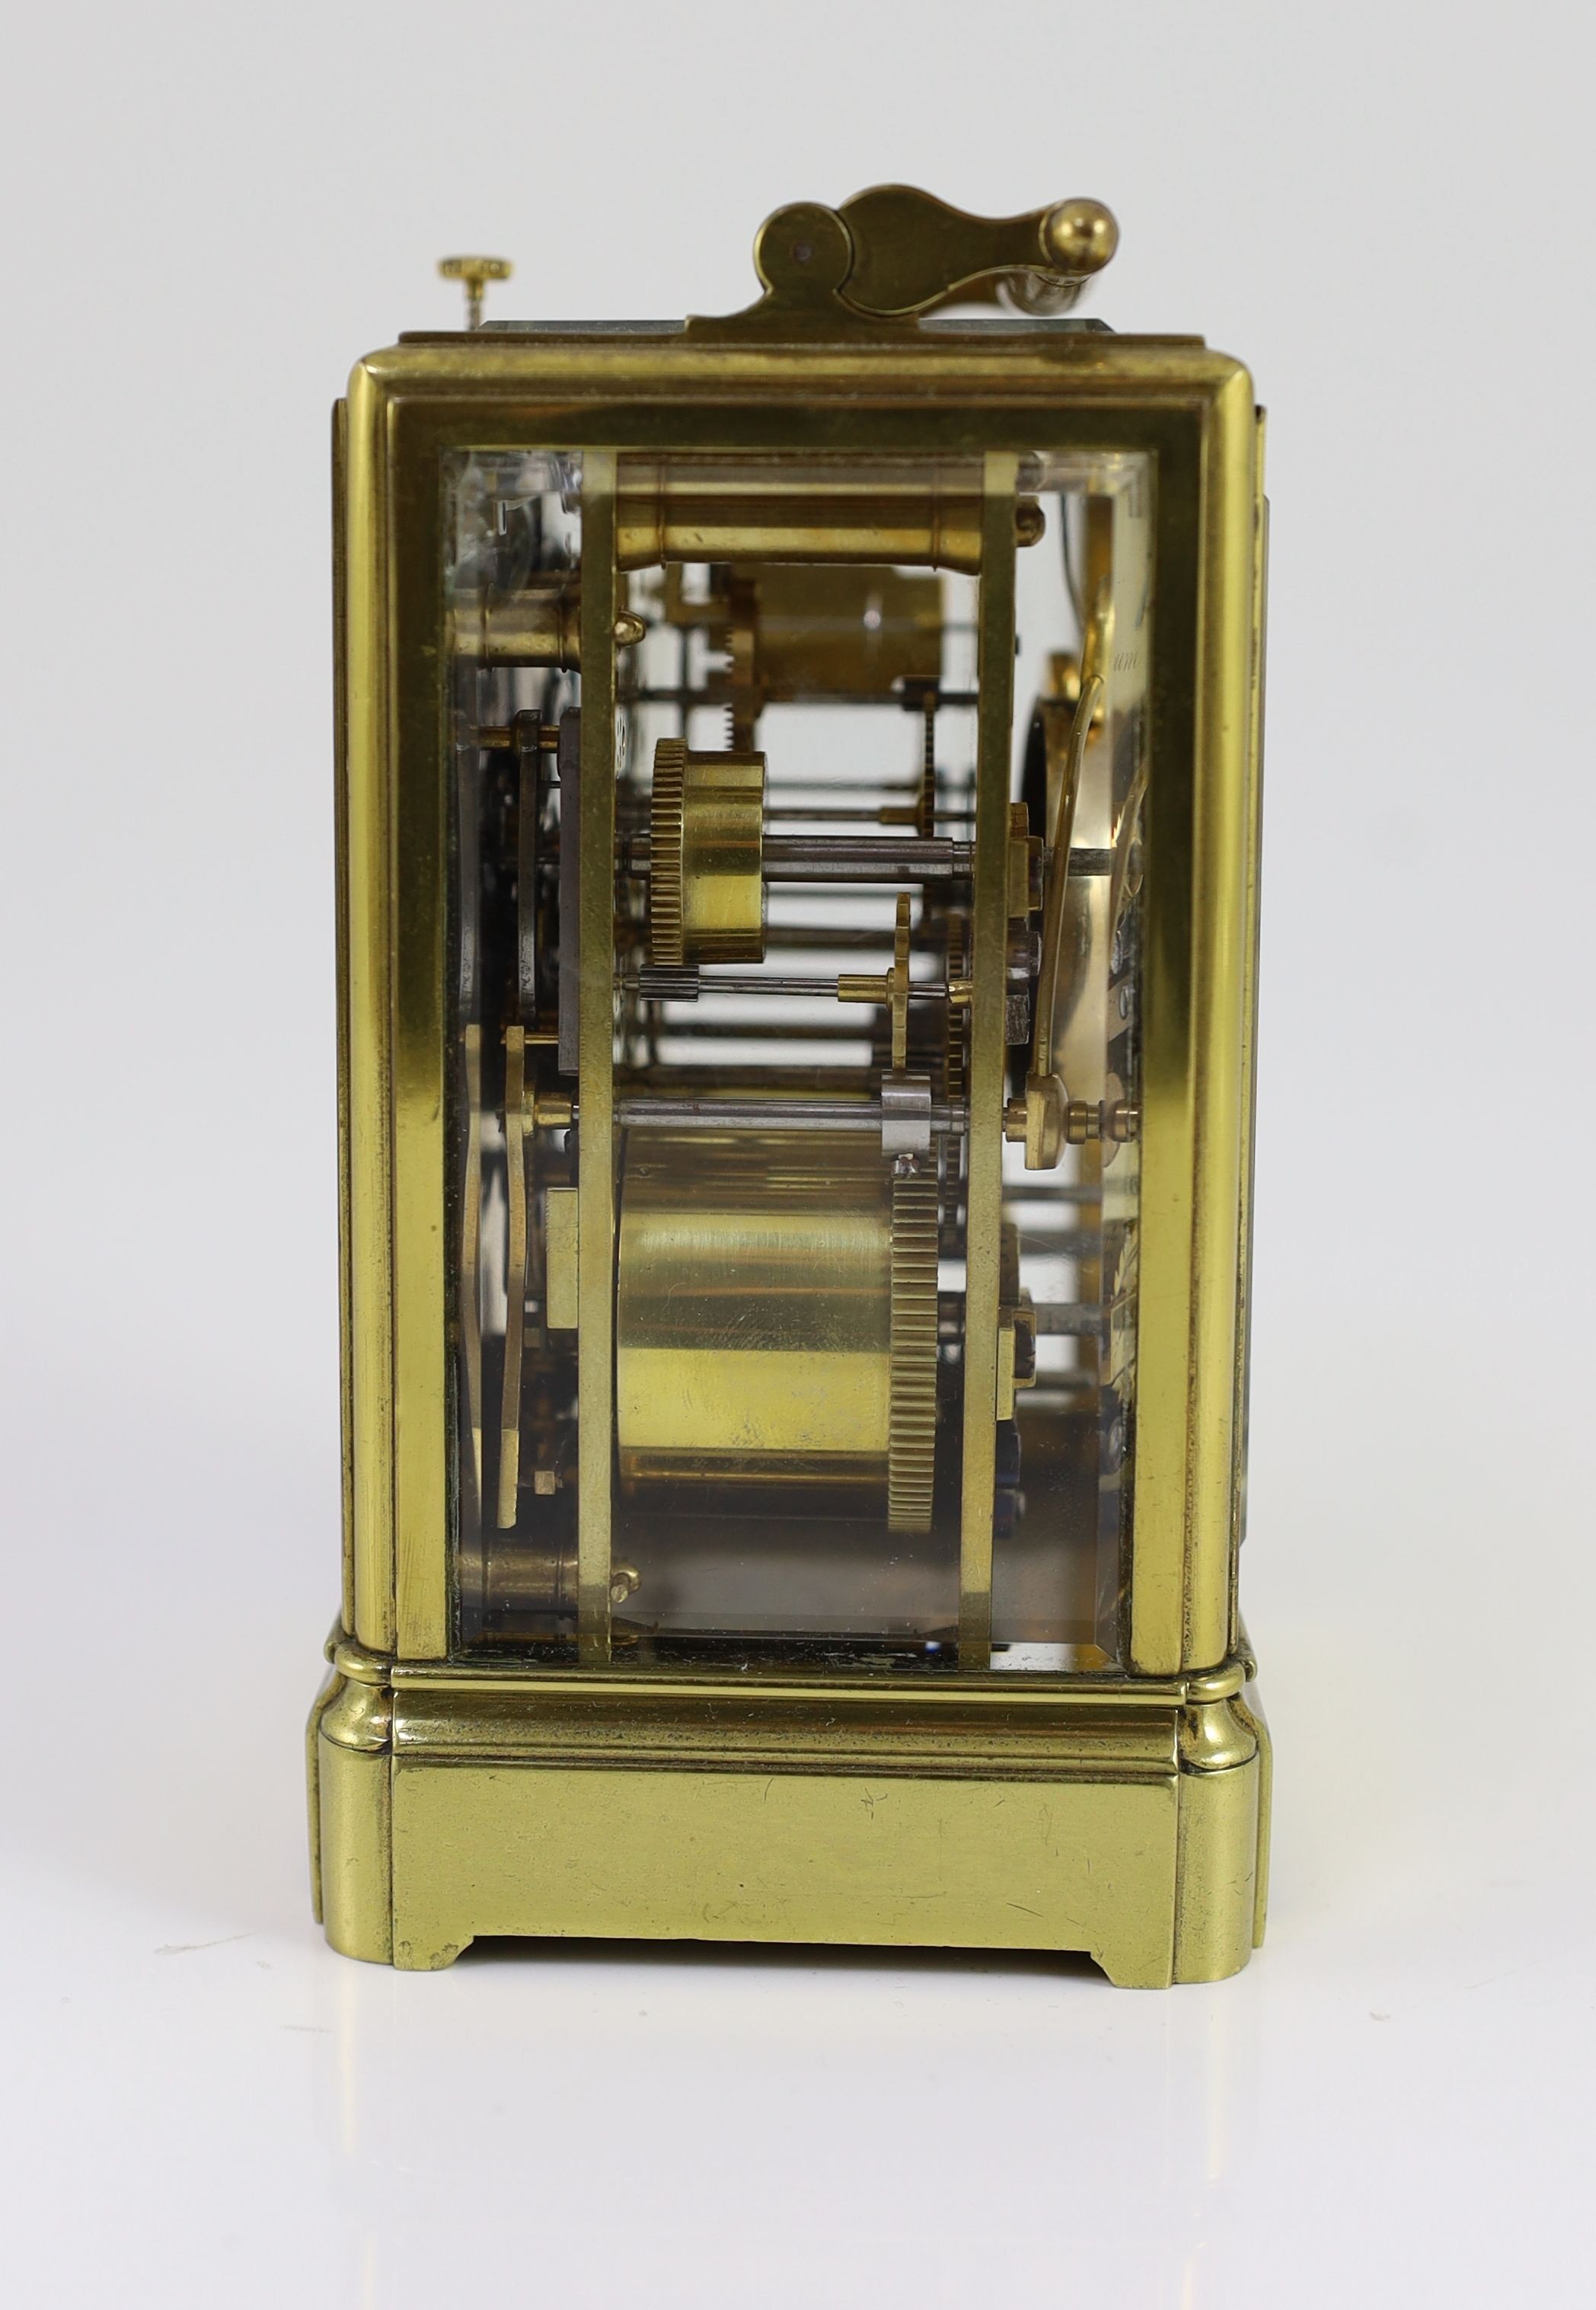 Aubert & Klaftenberger, Geneva. A late 19th century hour repeating carriage alarum clock, width 9cm depth 8cm height 14cm